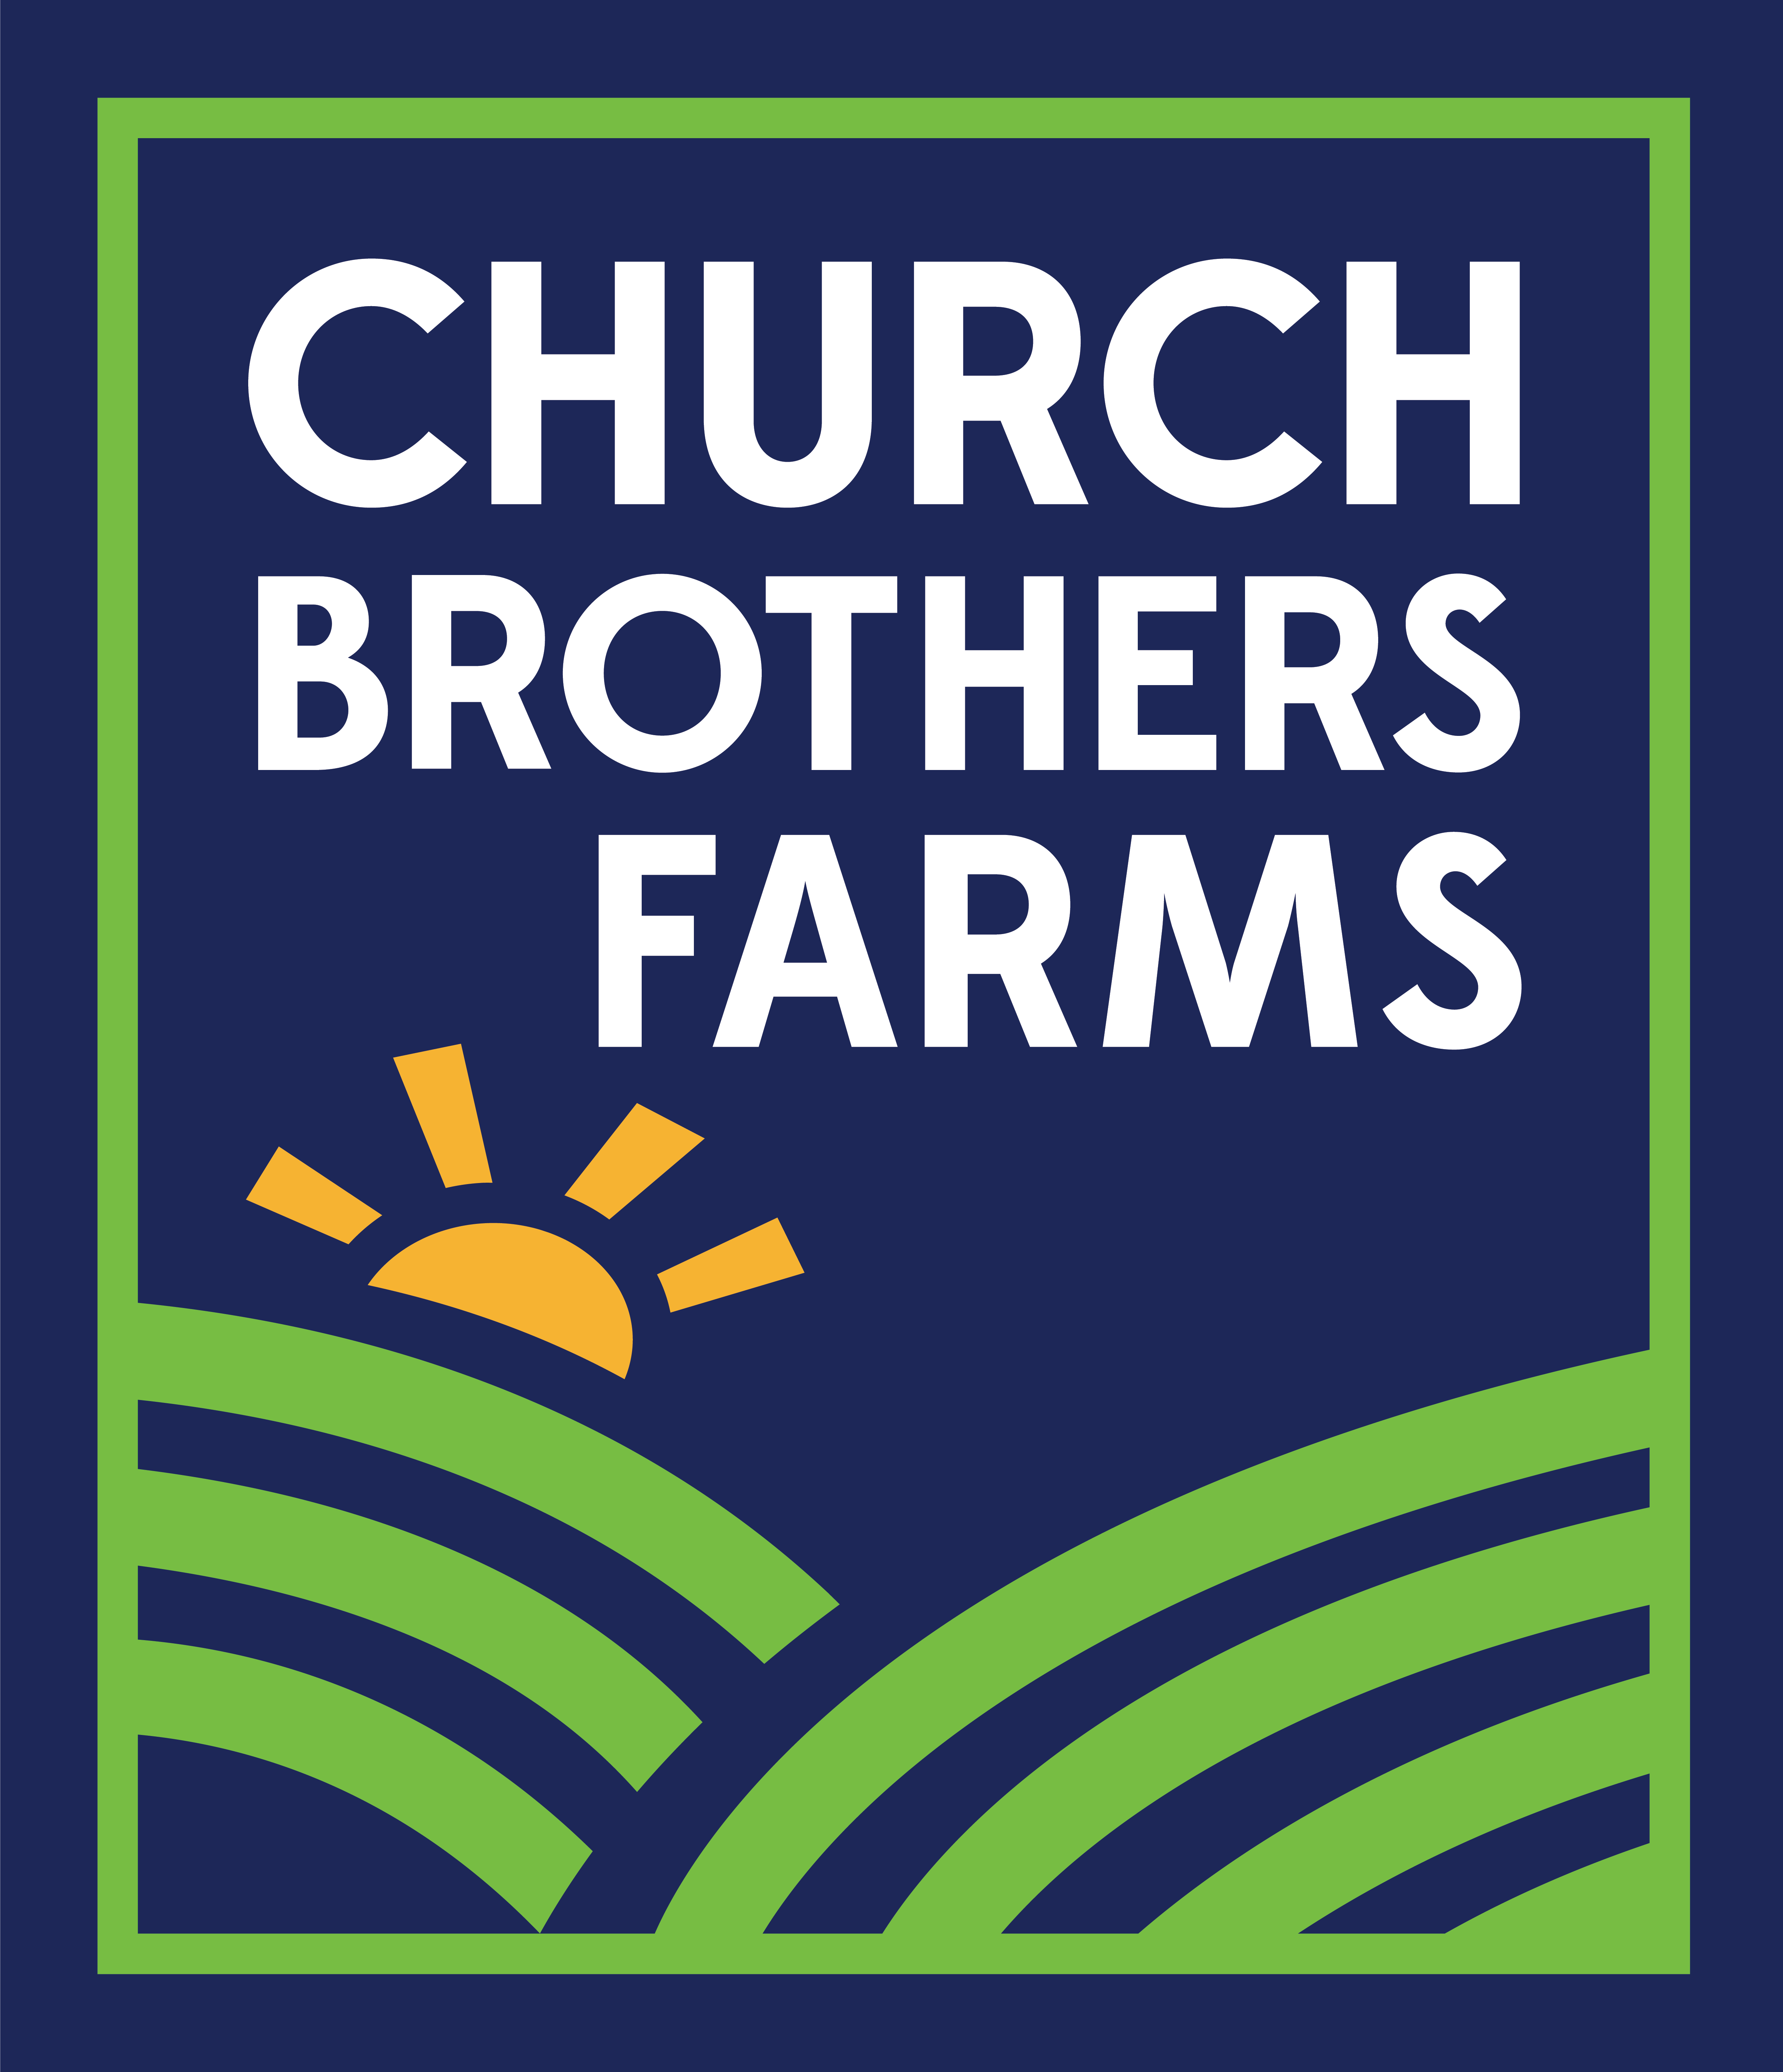 Church Brothers Farm